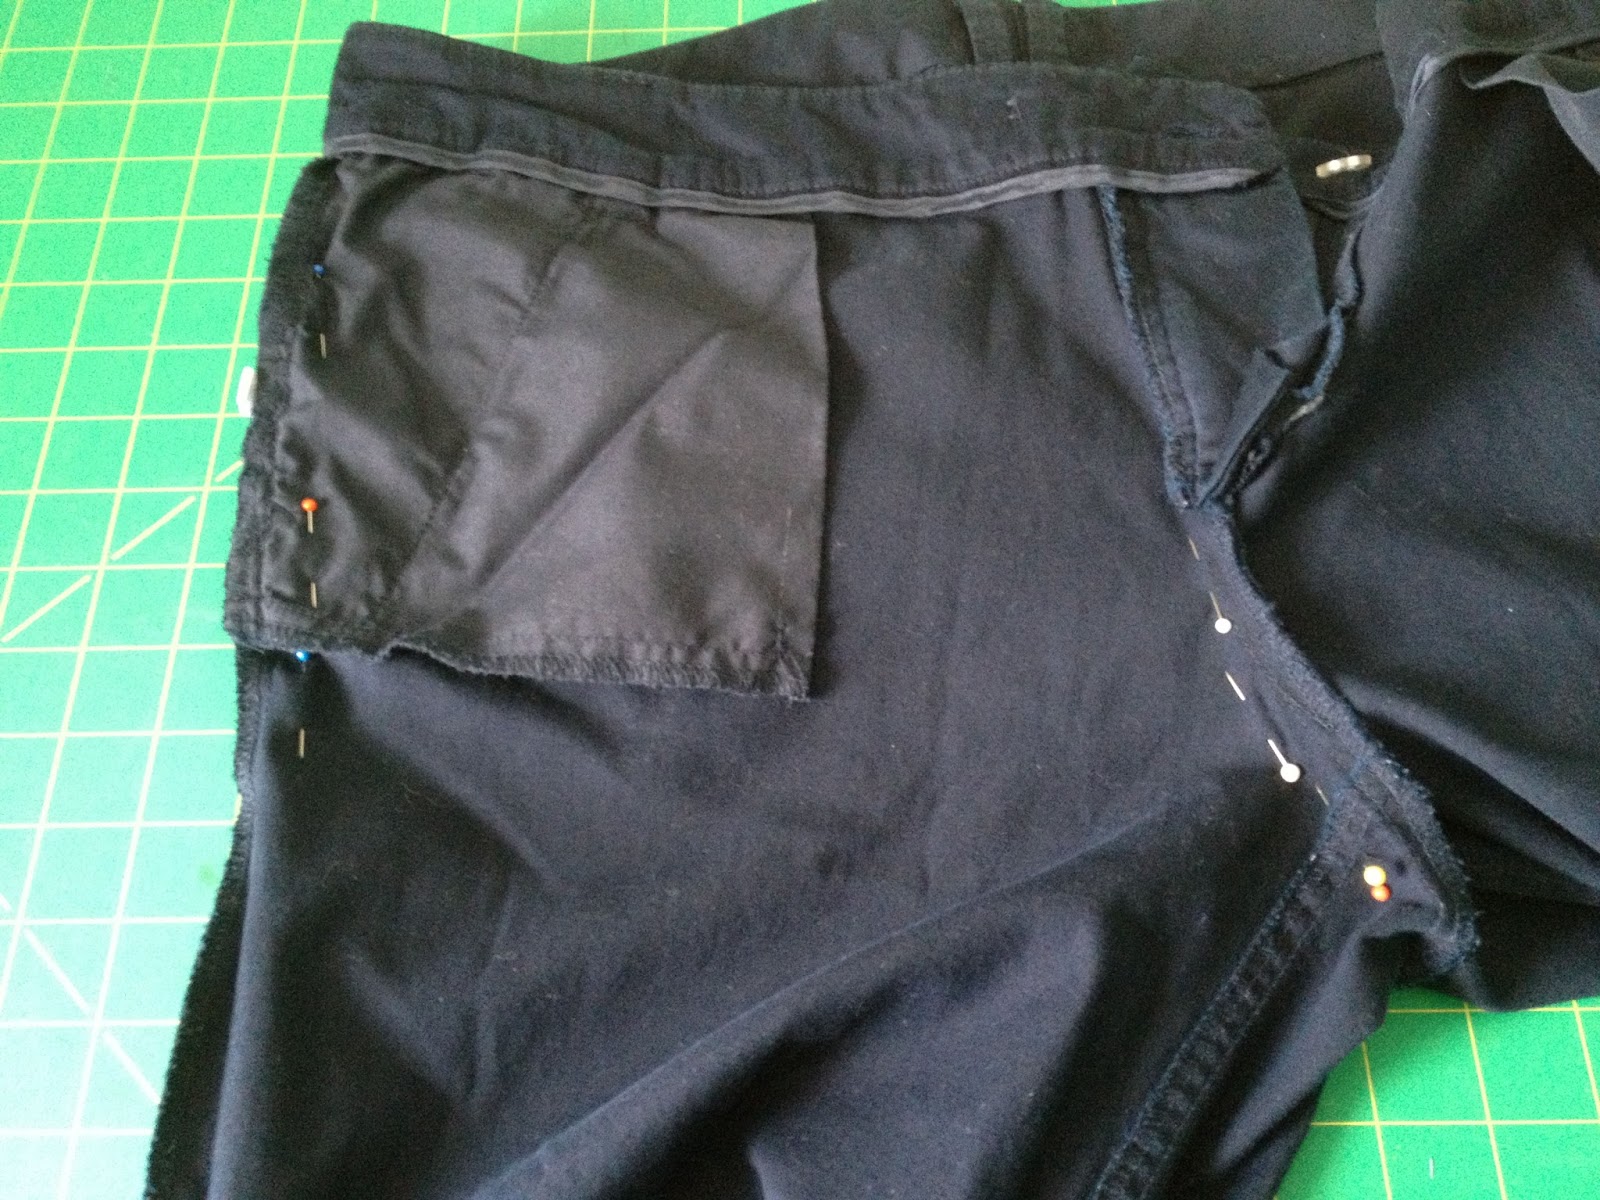 Fabricista Refashion: Wide Leg Pants to Skinny Pants!